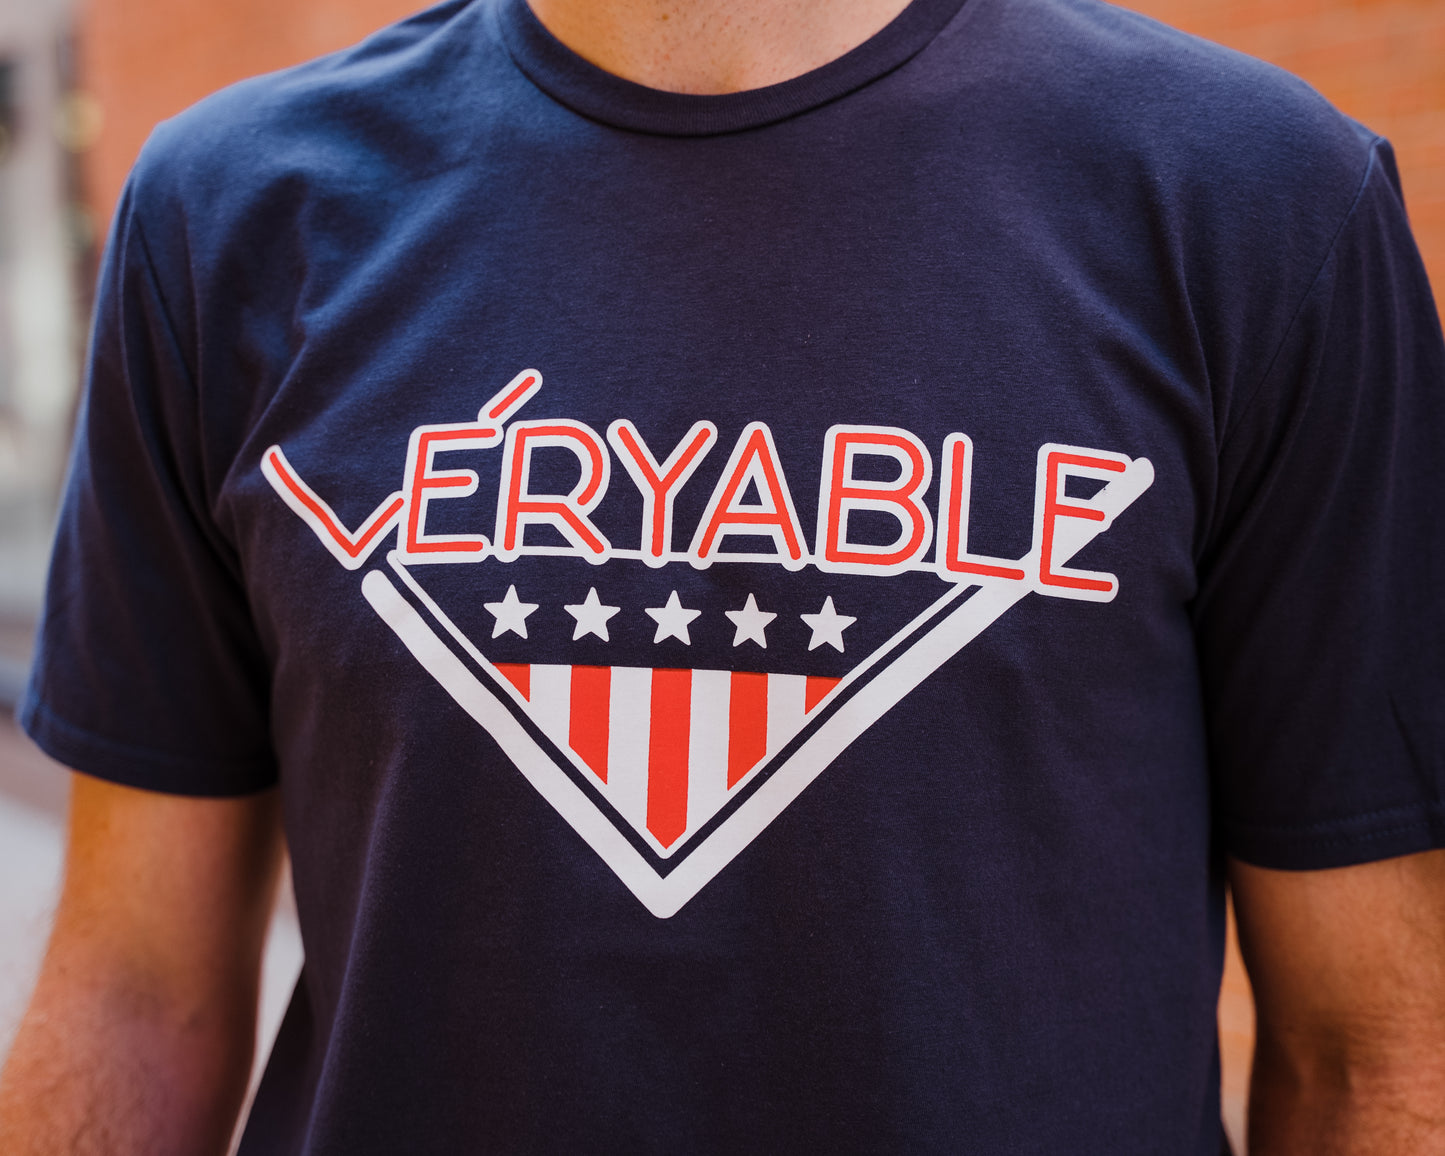 Veryable "Patriotic" T-Shirt